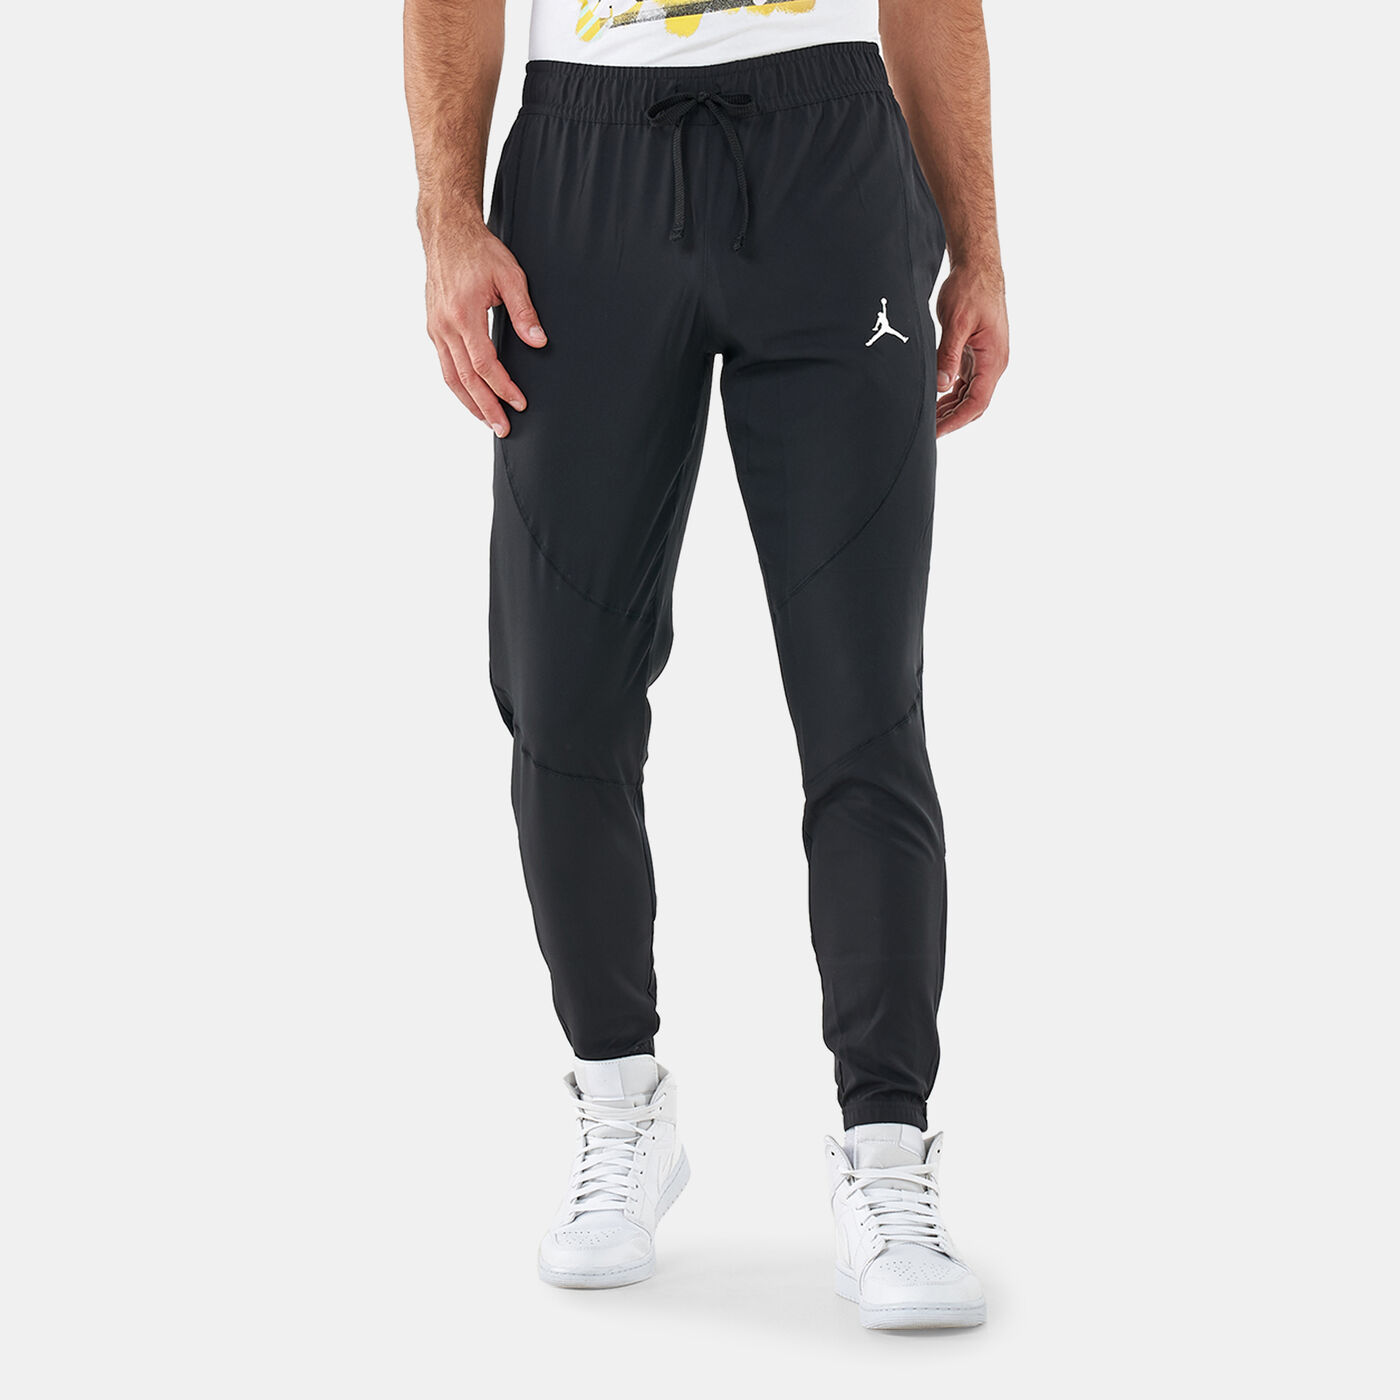 Men's Sport Dri-FIT Pants